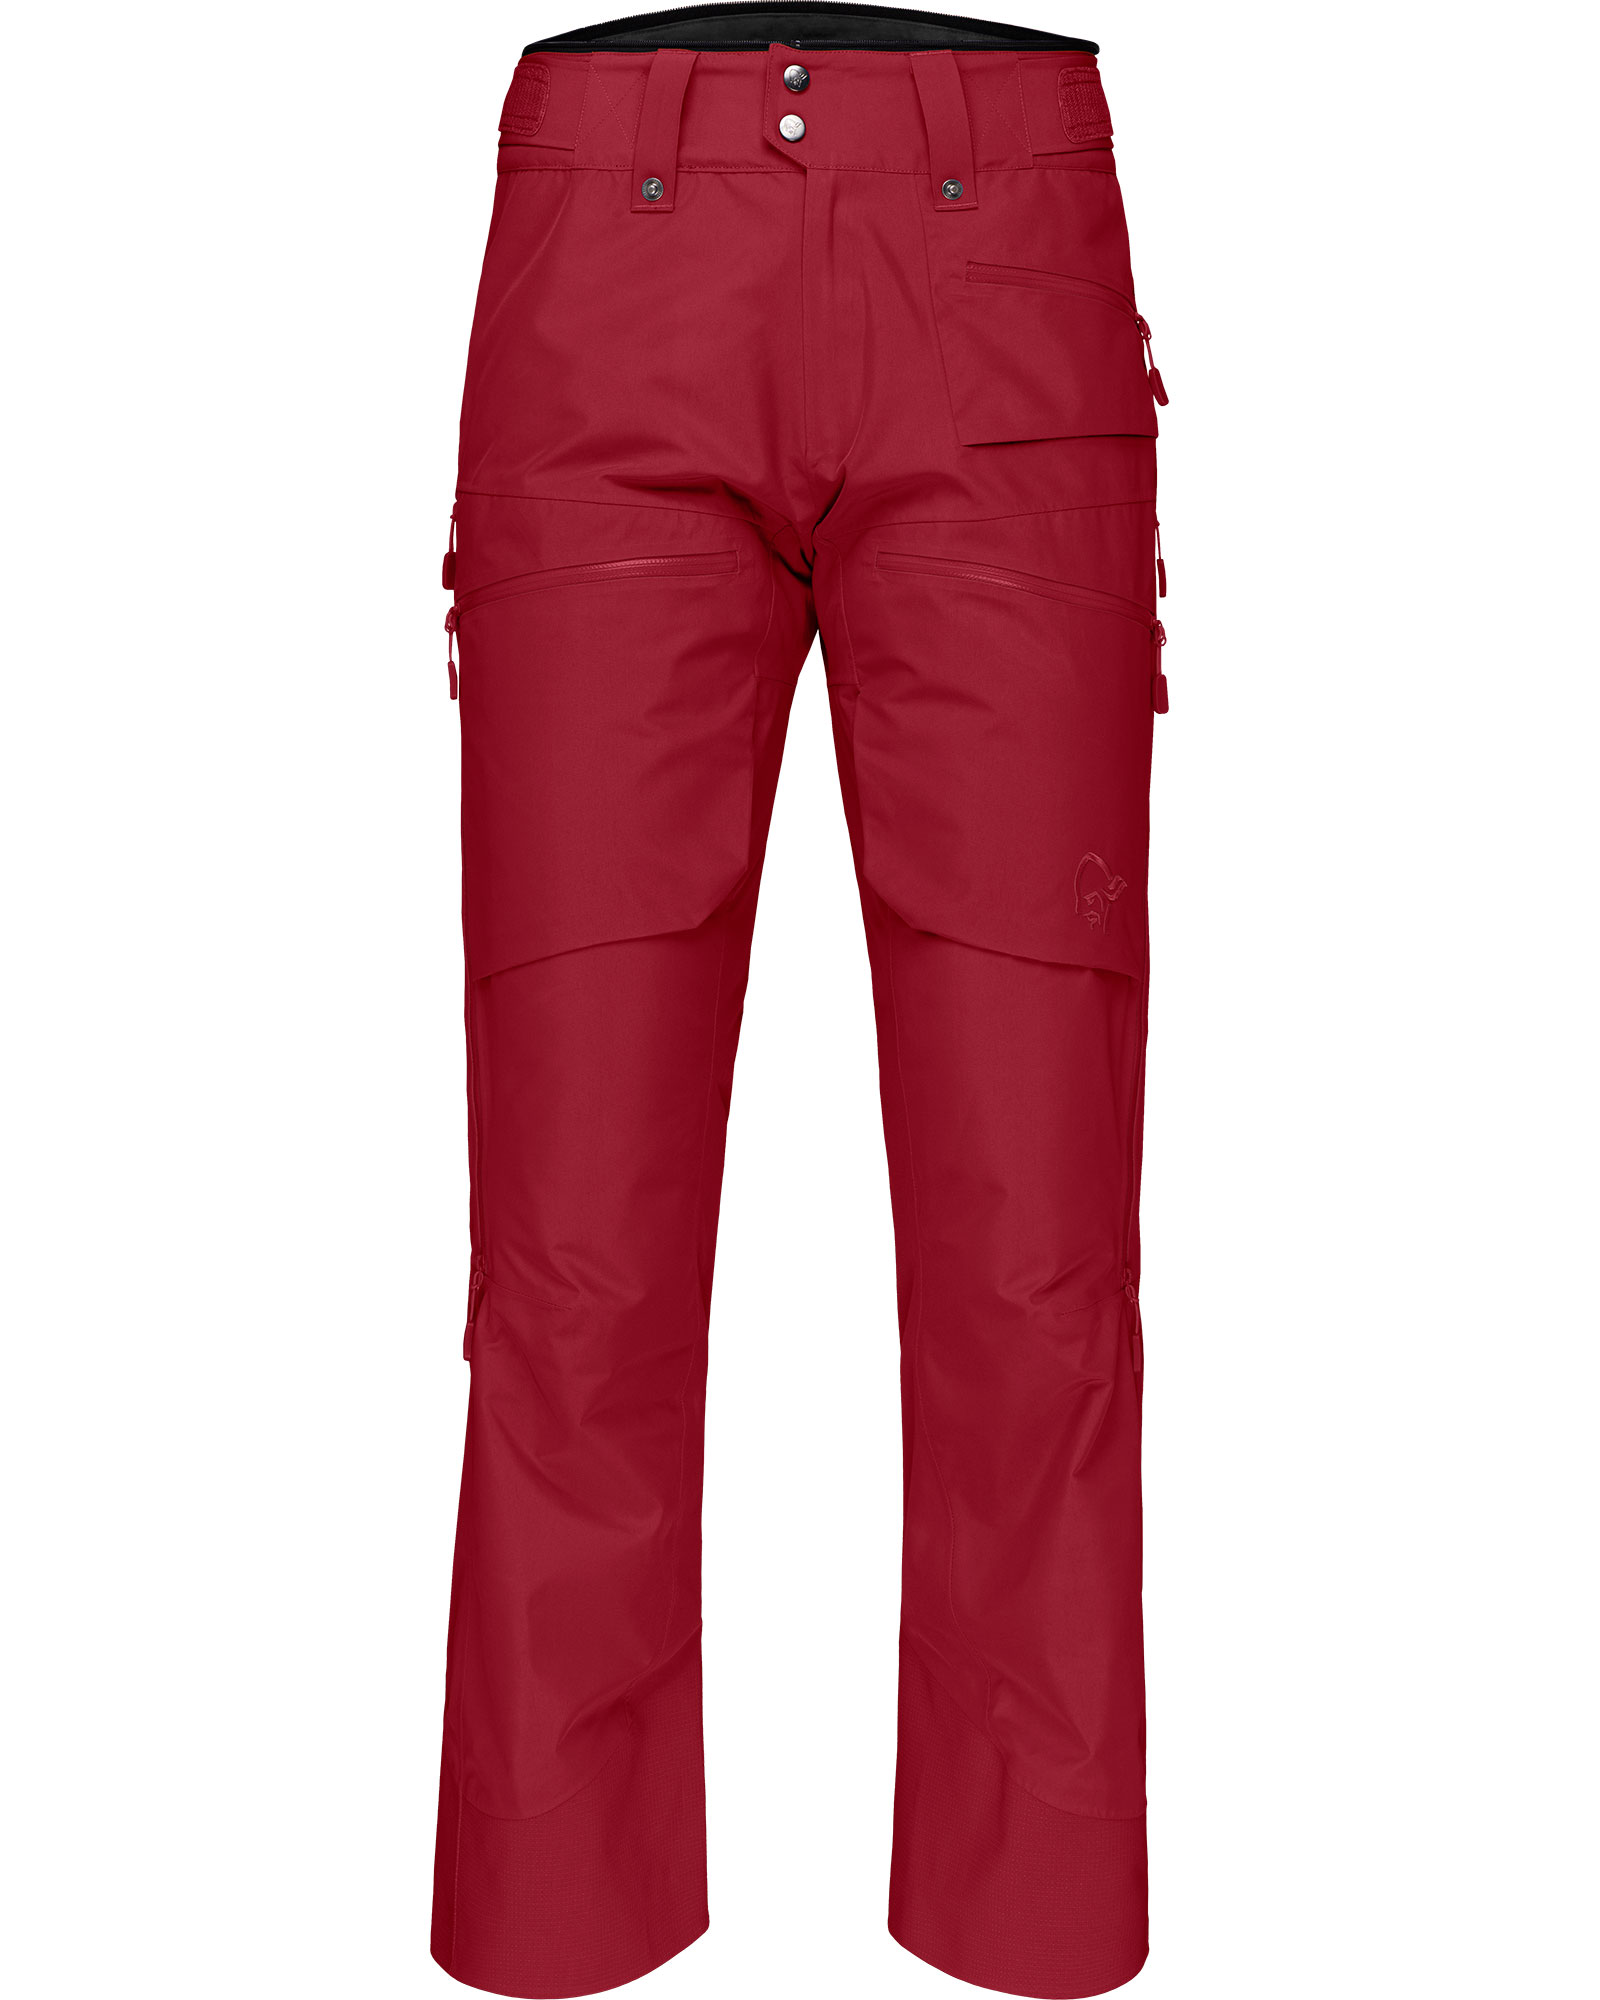 Norrona Men's Lofoten GORE-TEX Insulated Pants